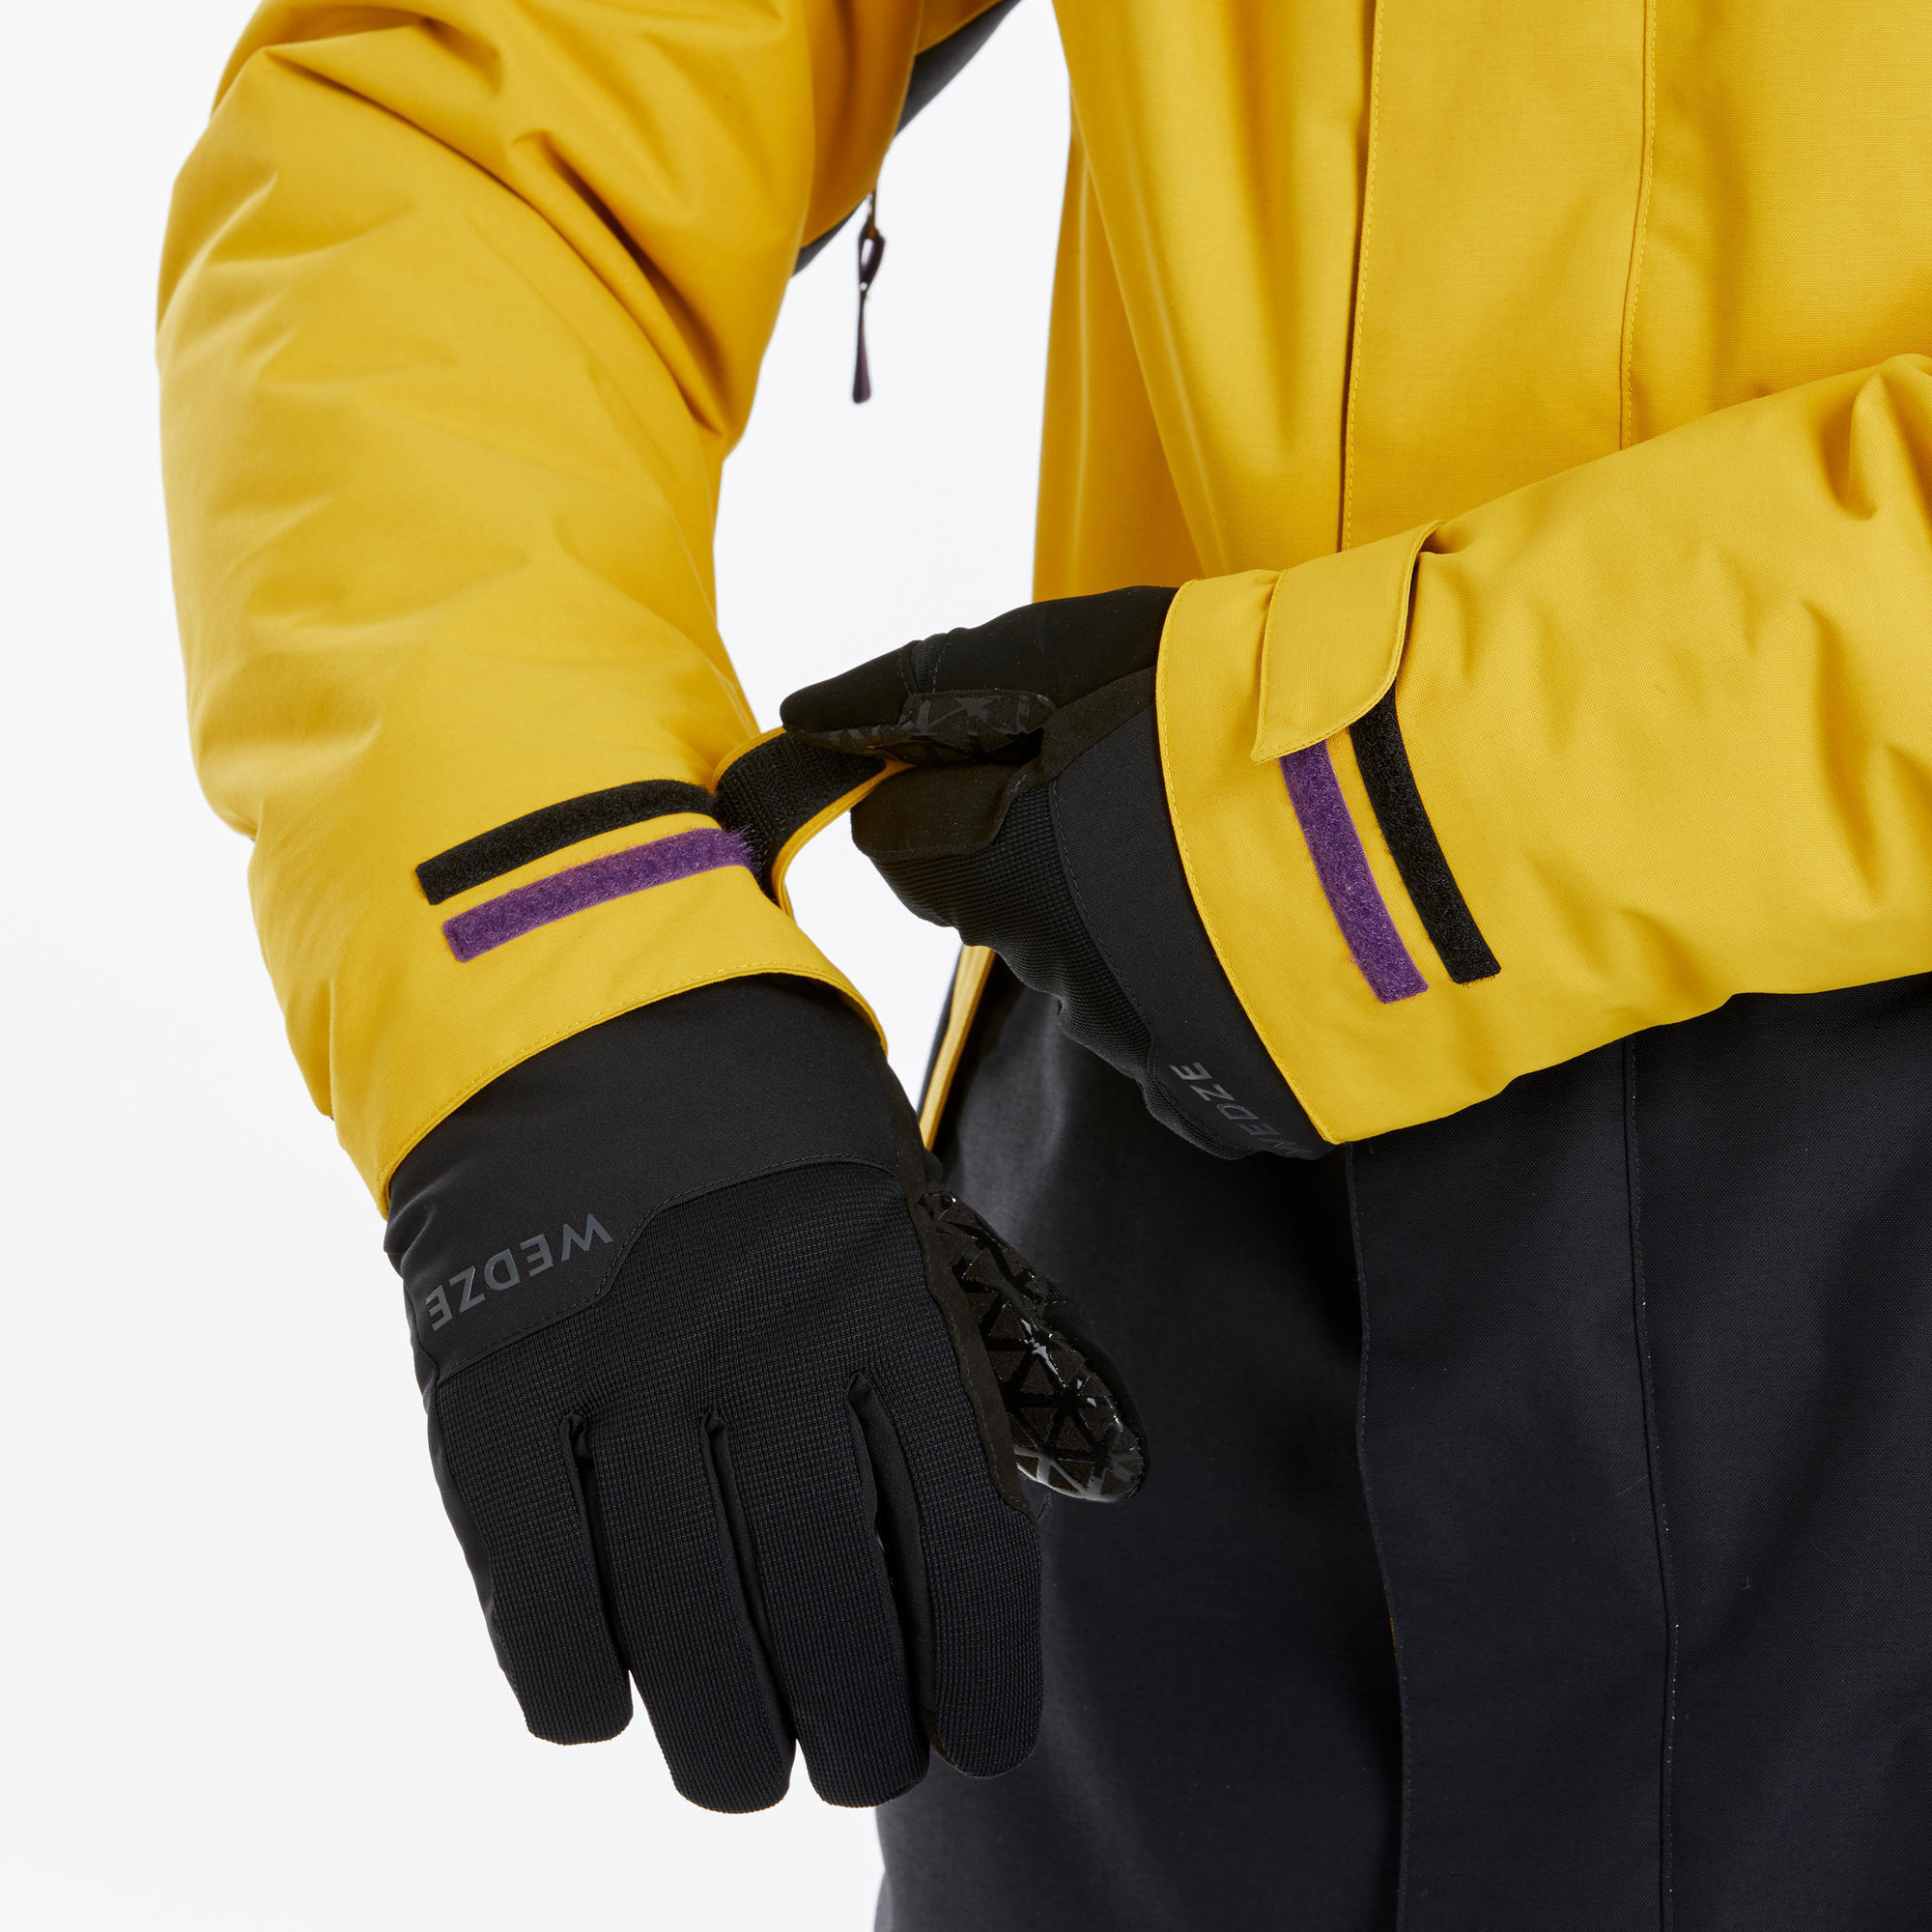 Men's Snowboard Jacket - SNB 100 Yellow 10/13